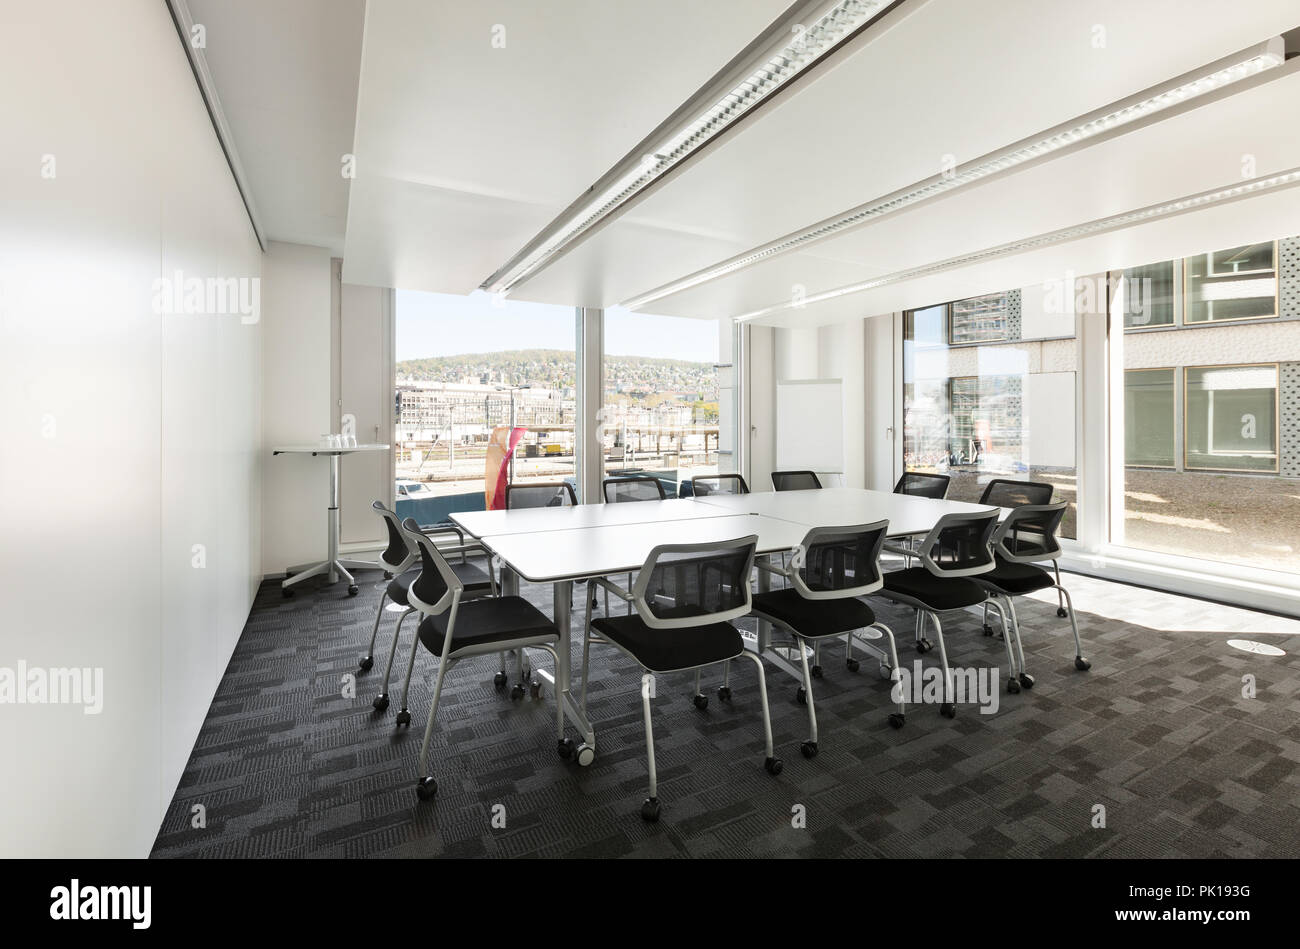 Building, interior, empty meeting room Stock Photo